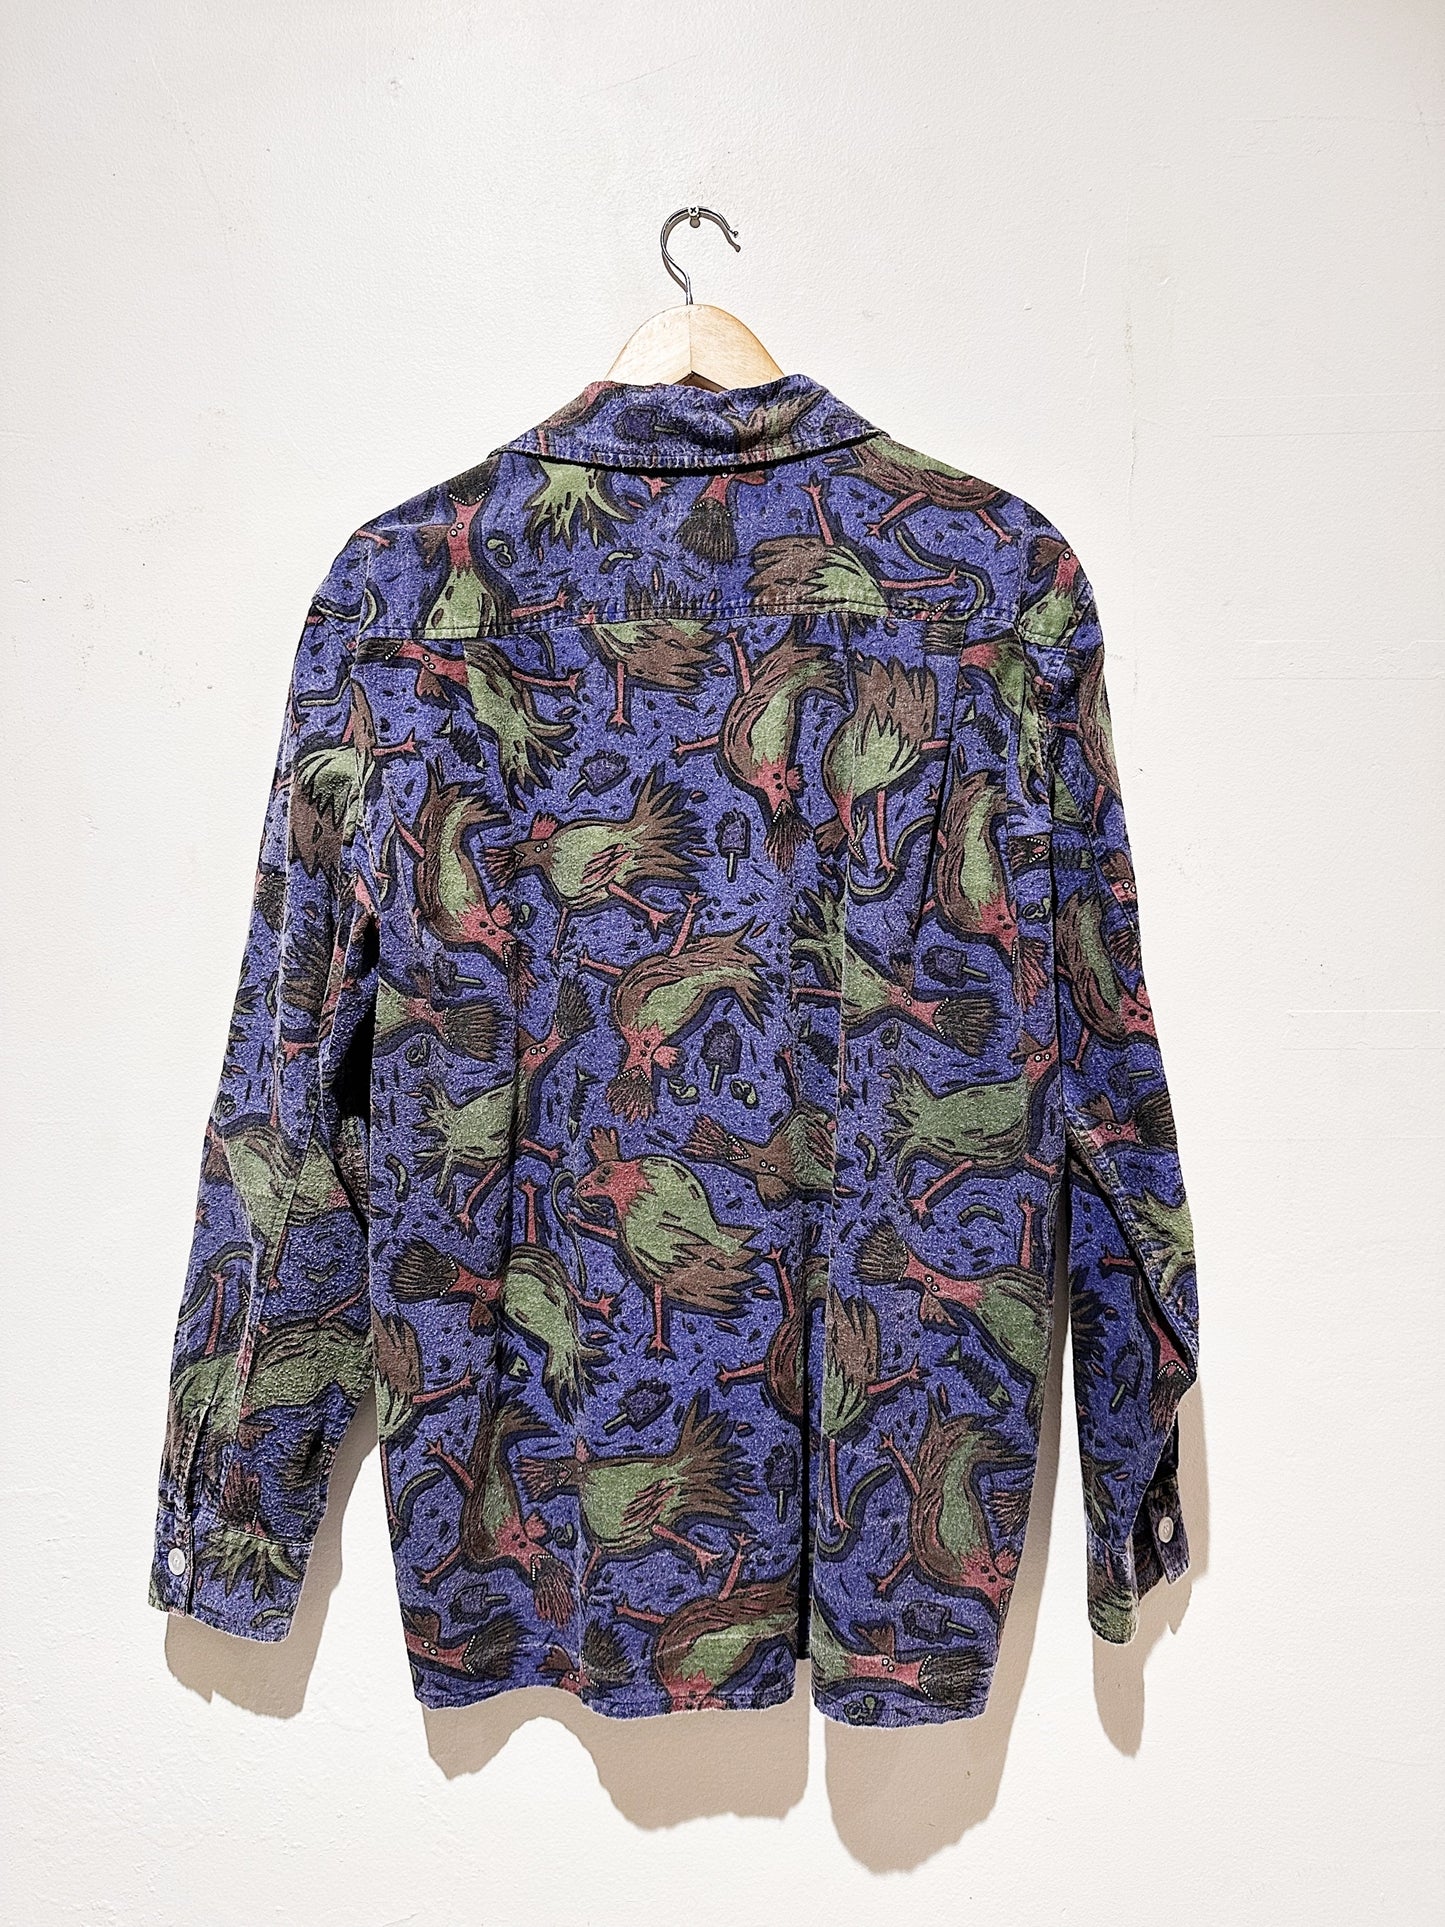 Reg Mombassa "Violent Hen"  Vintage Cotton Felt Mambo Shirt 111